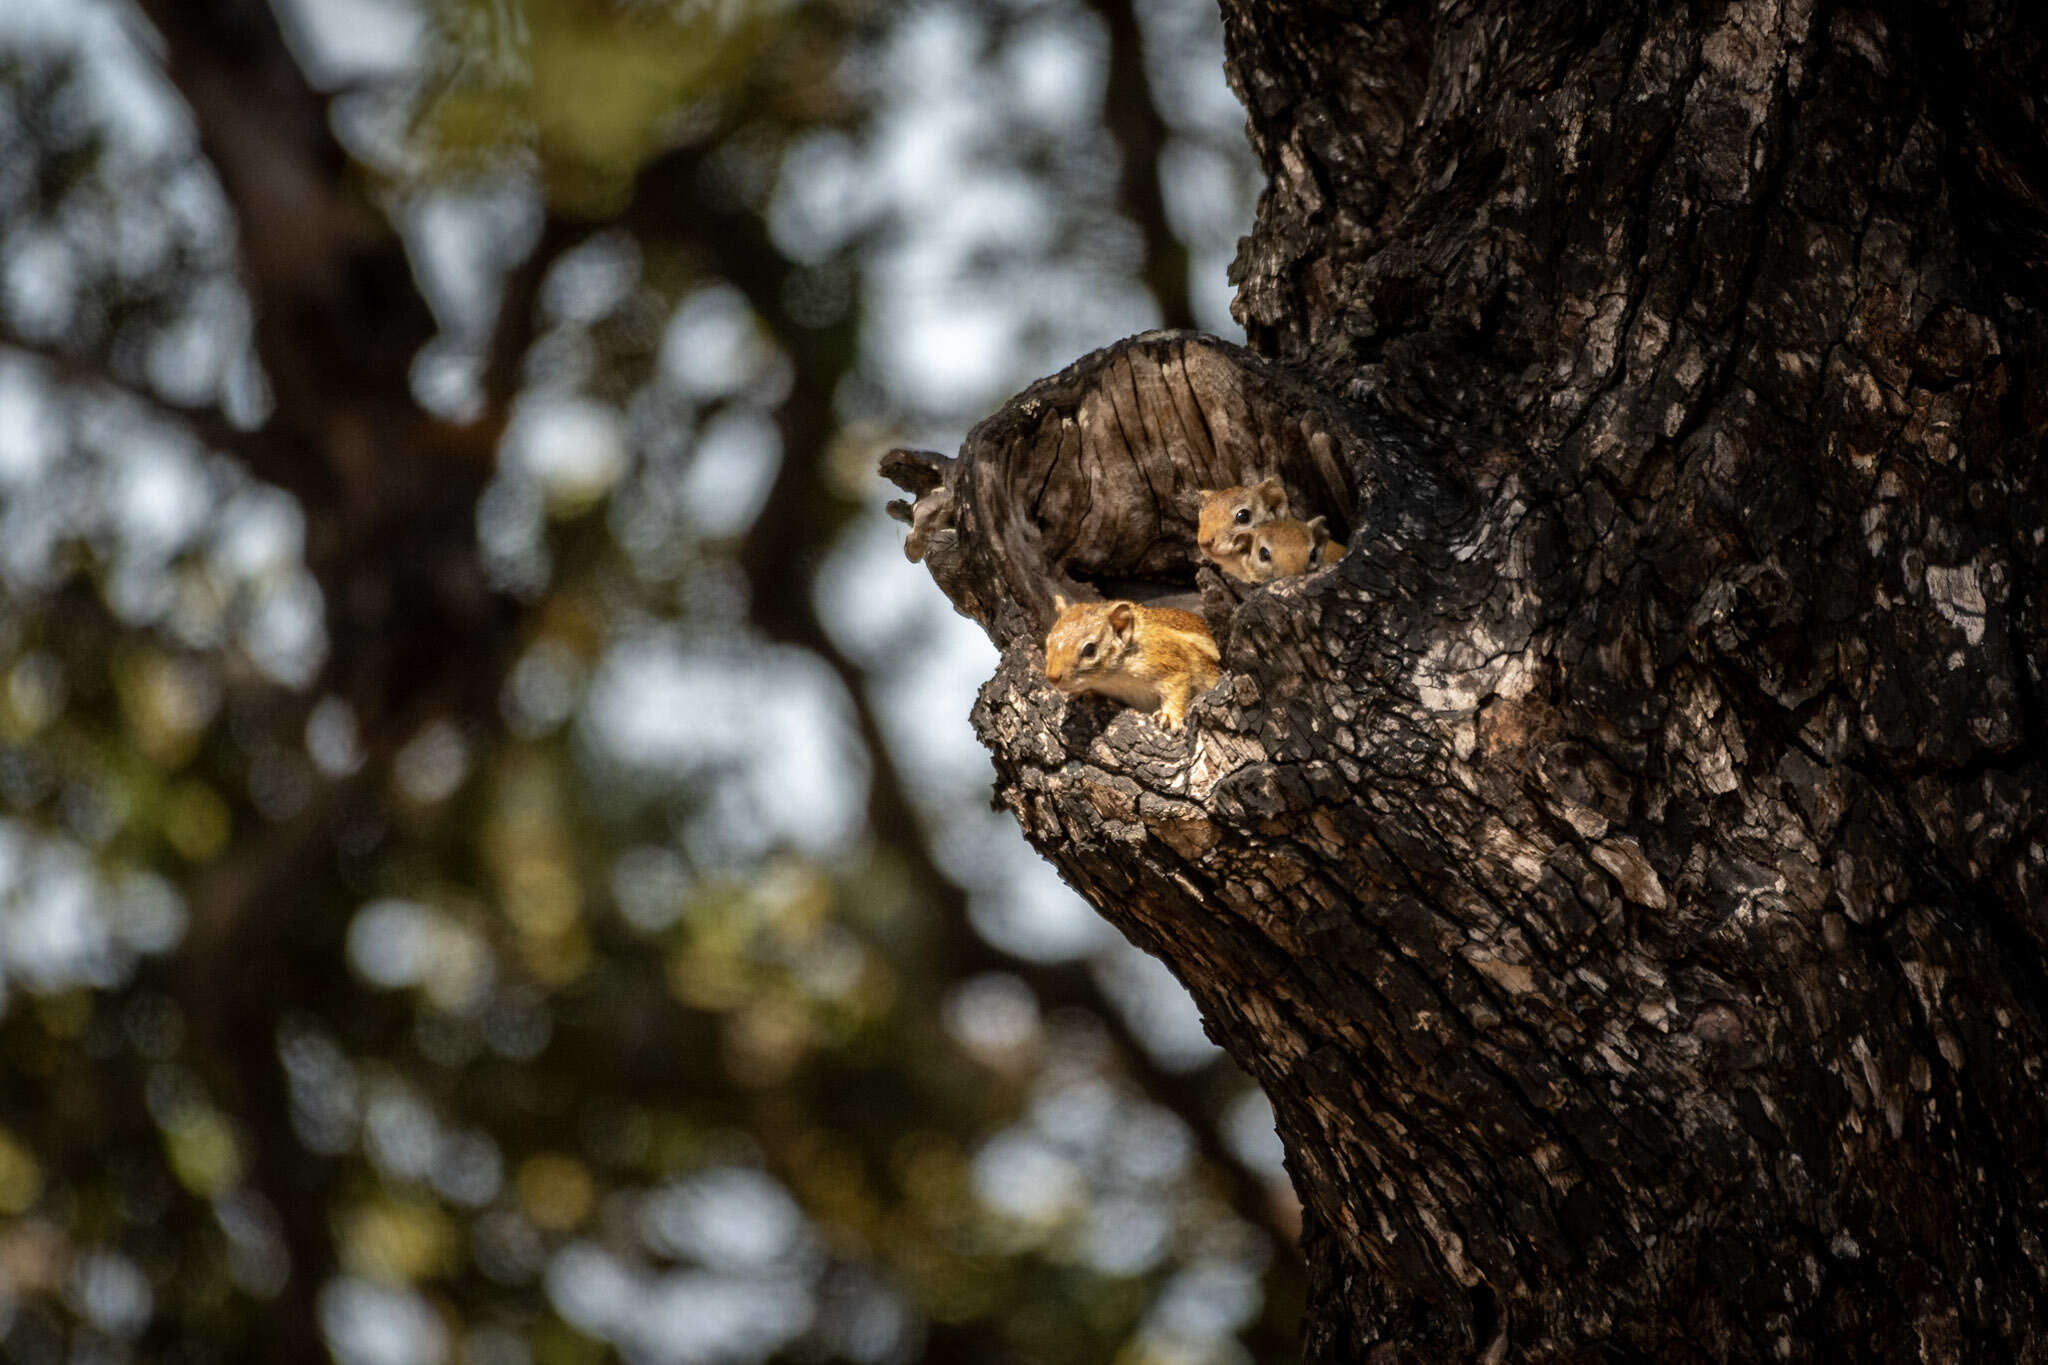 Image of Striped Bush Squirrel